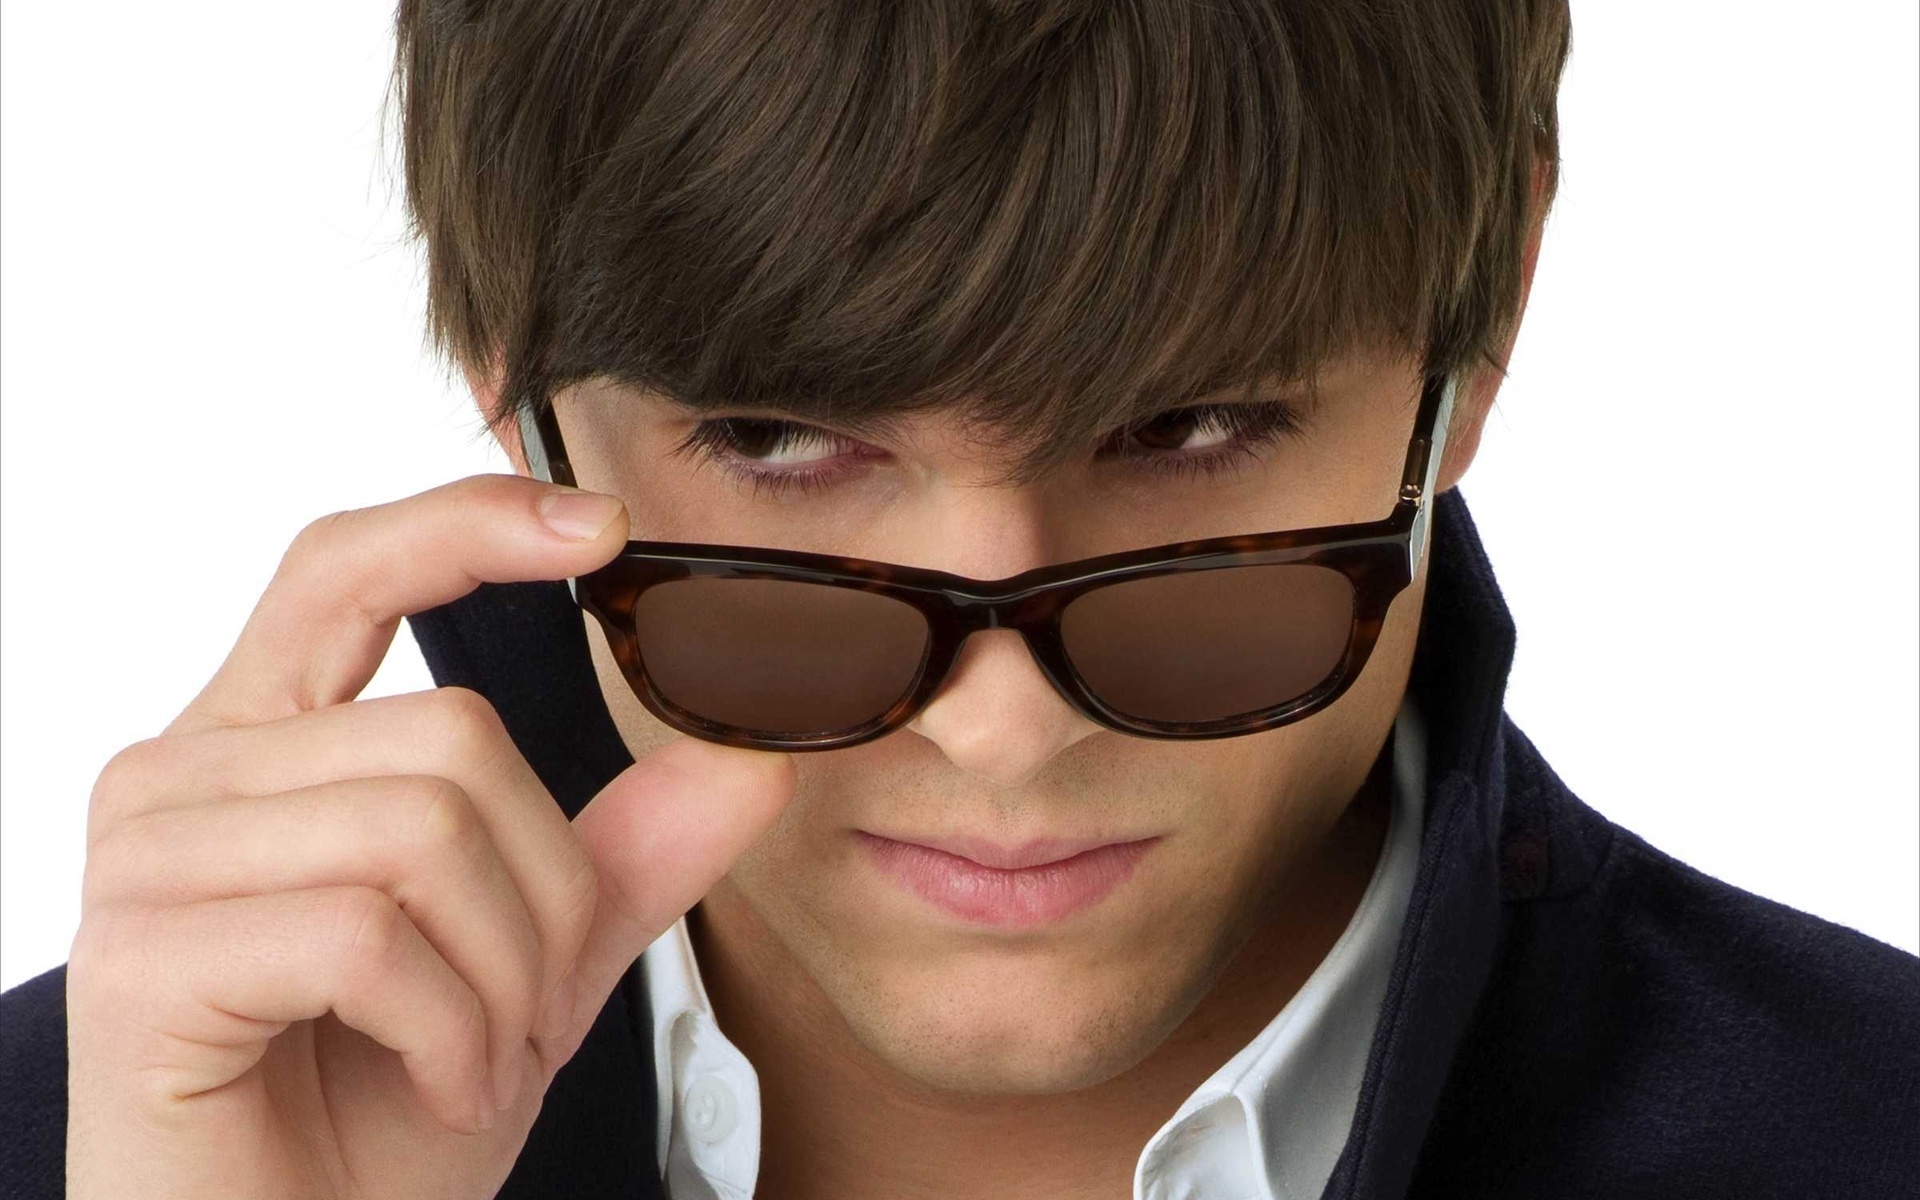 Ashton Kutcher with Sunglasses for 1920 x 1200 widescreen resolution